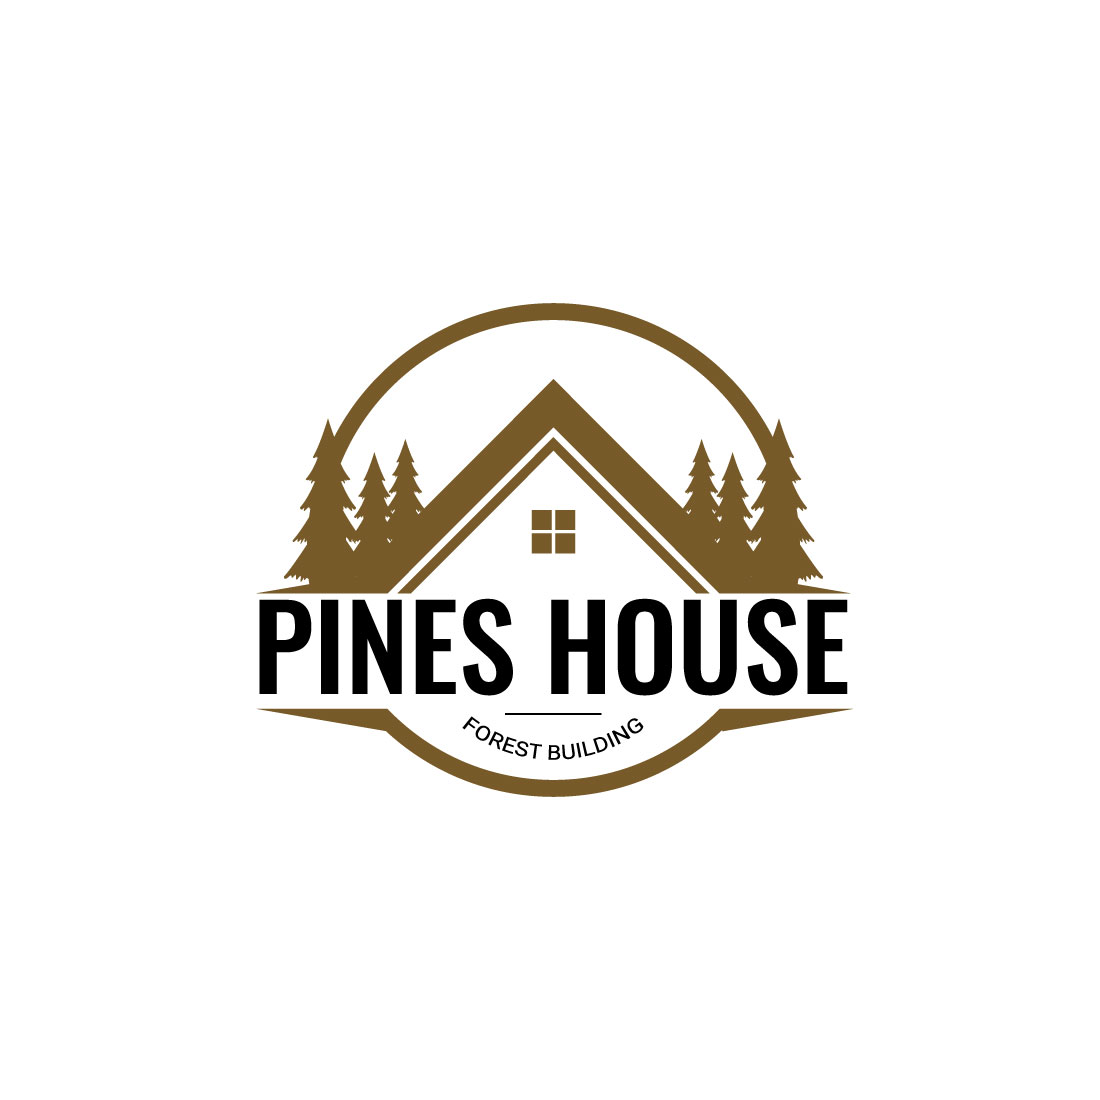 Pine House Logo design preview image.